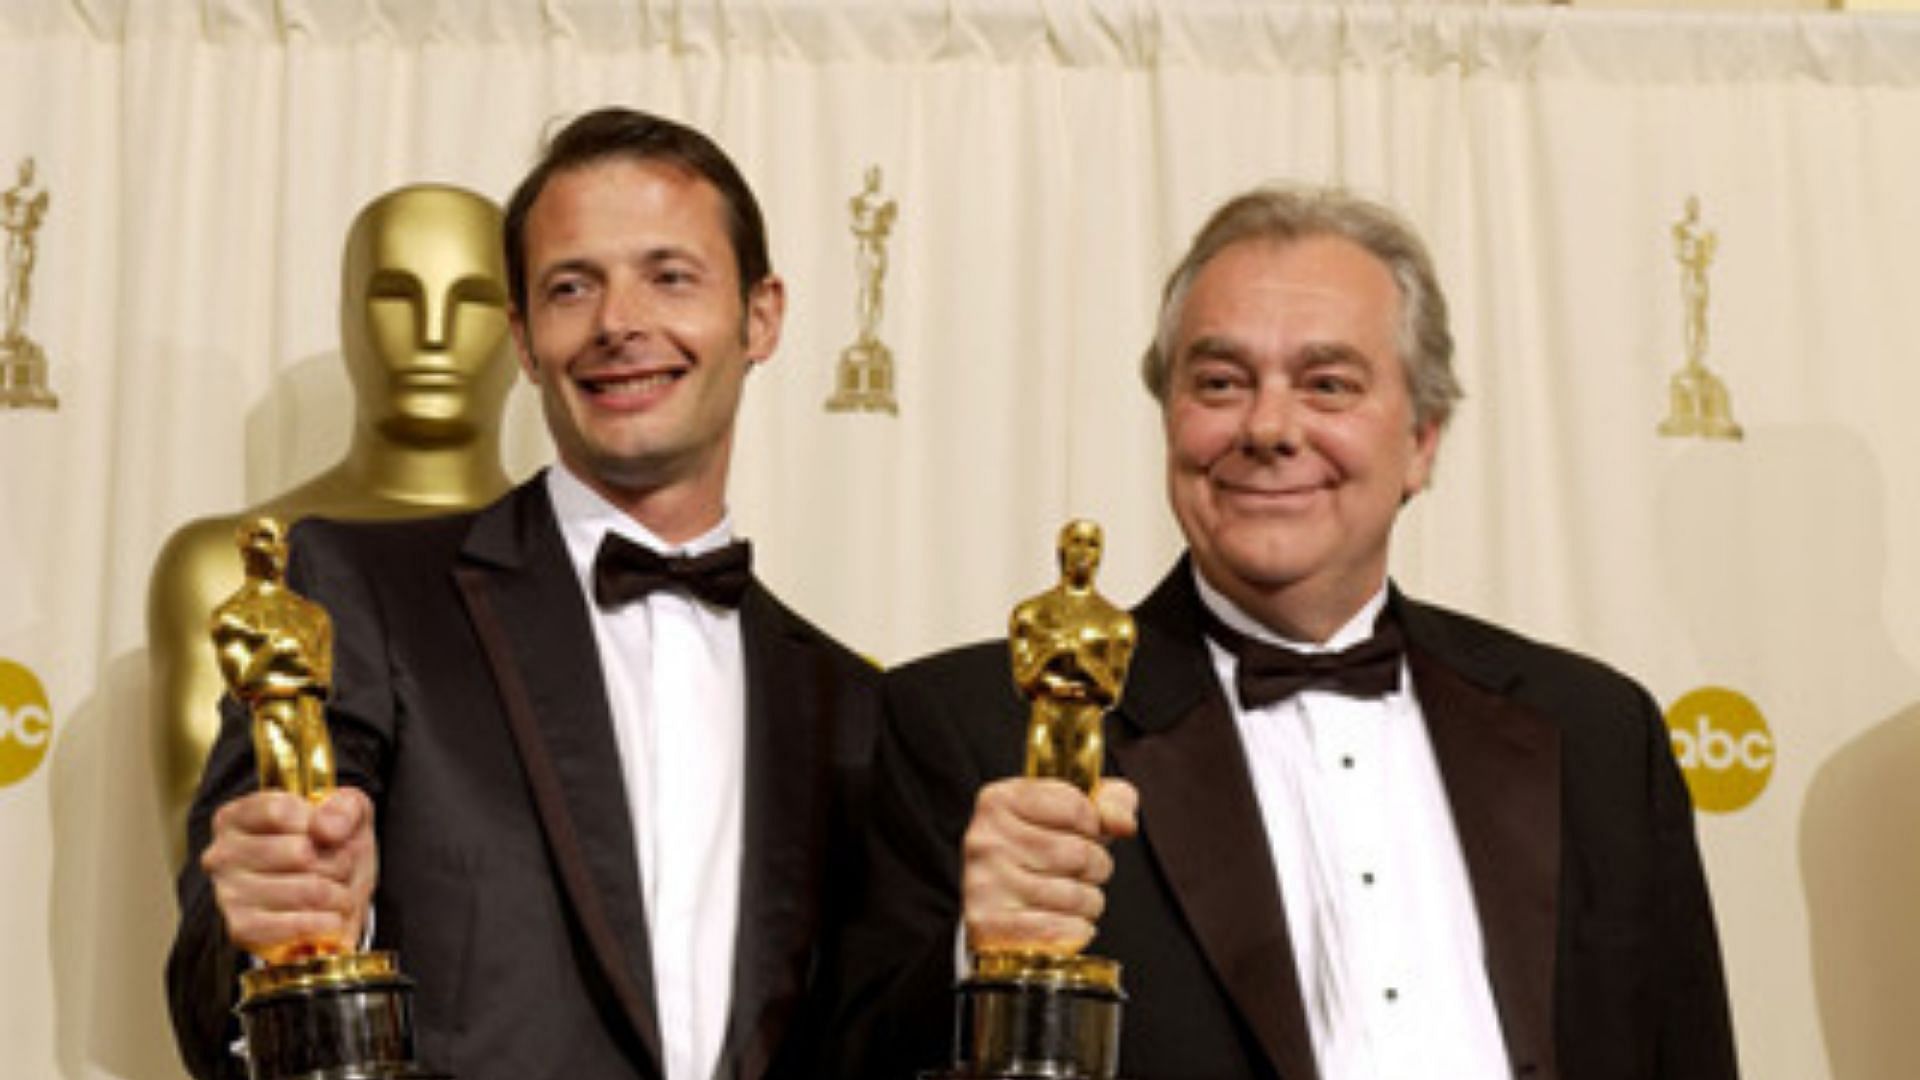 Jean-Xavier de Lestrade and Denis Poncet accepting an award (Image via IMDb)